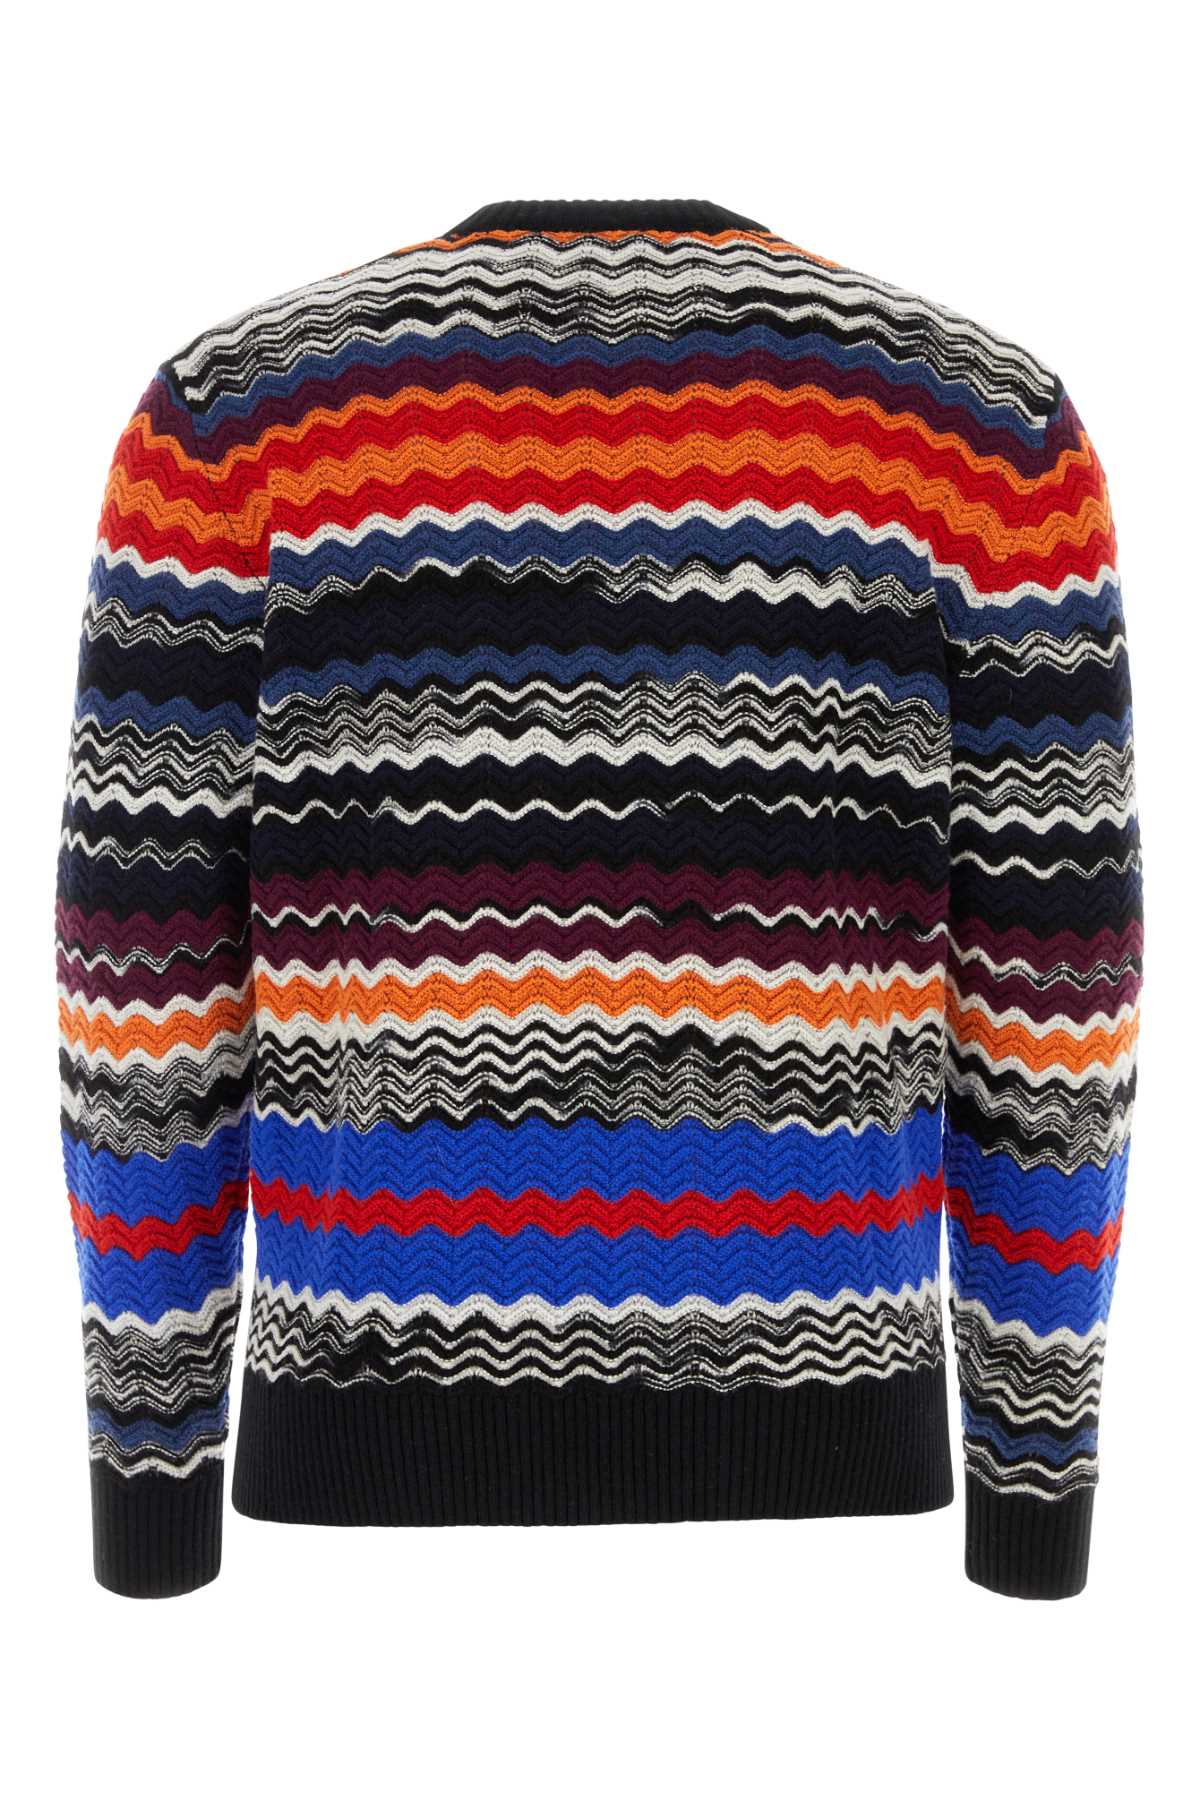 Missoni Embroidered Stretch Wool Blend Sweater In Orangeblackredbluewhite